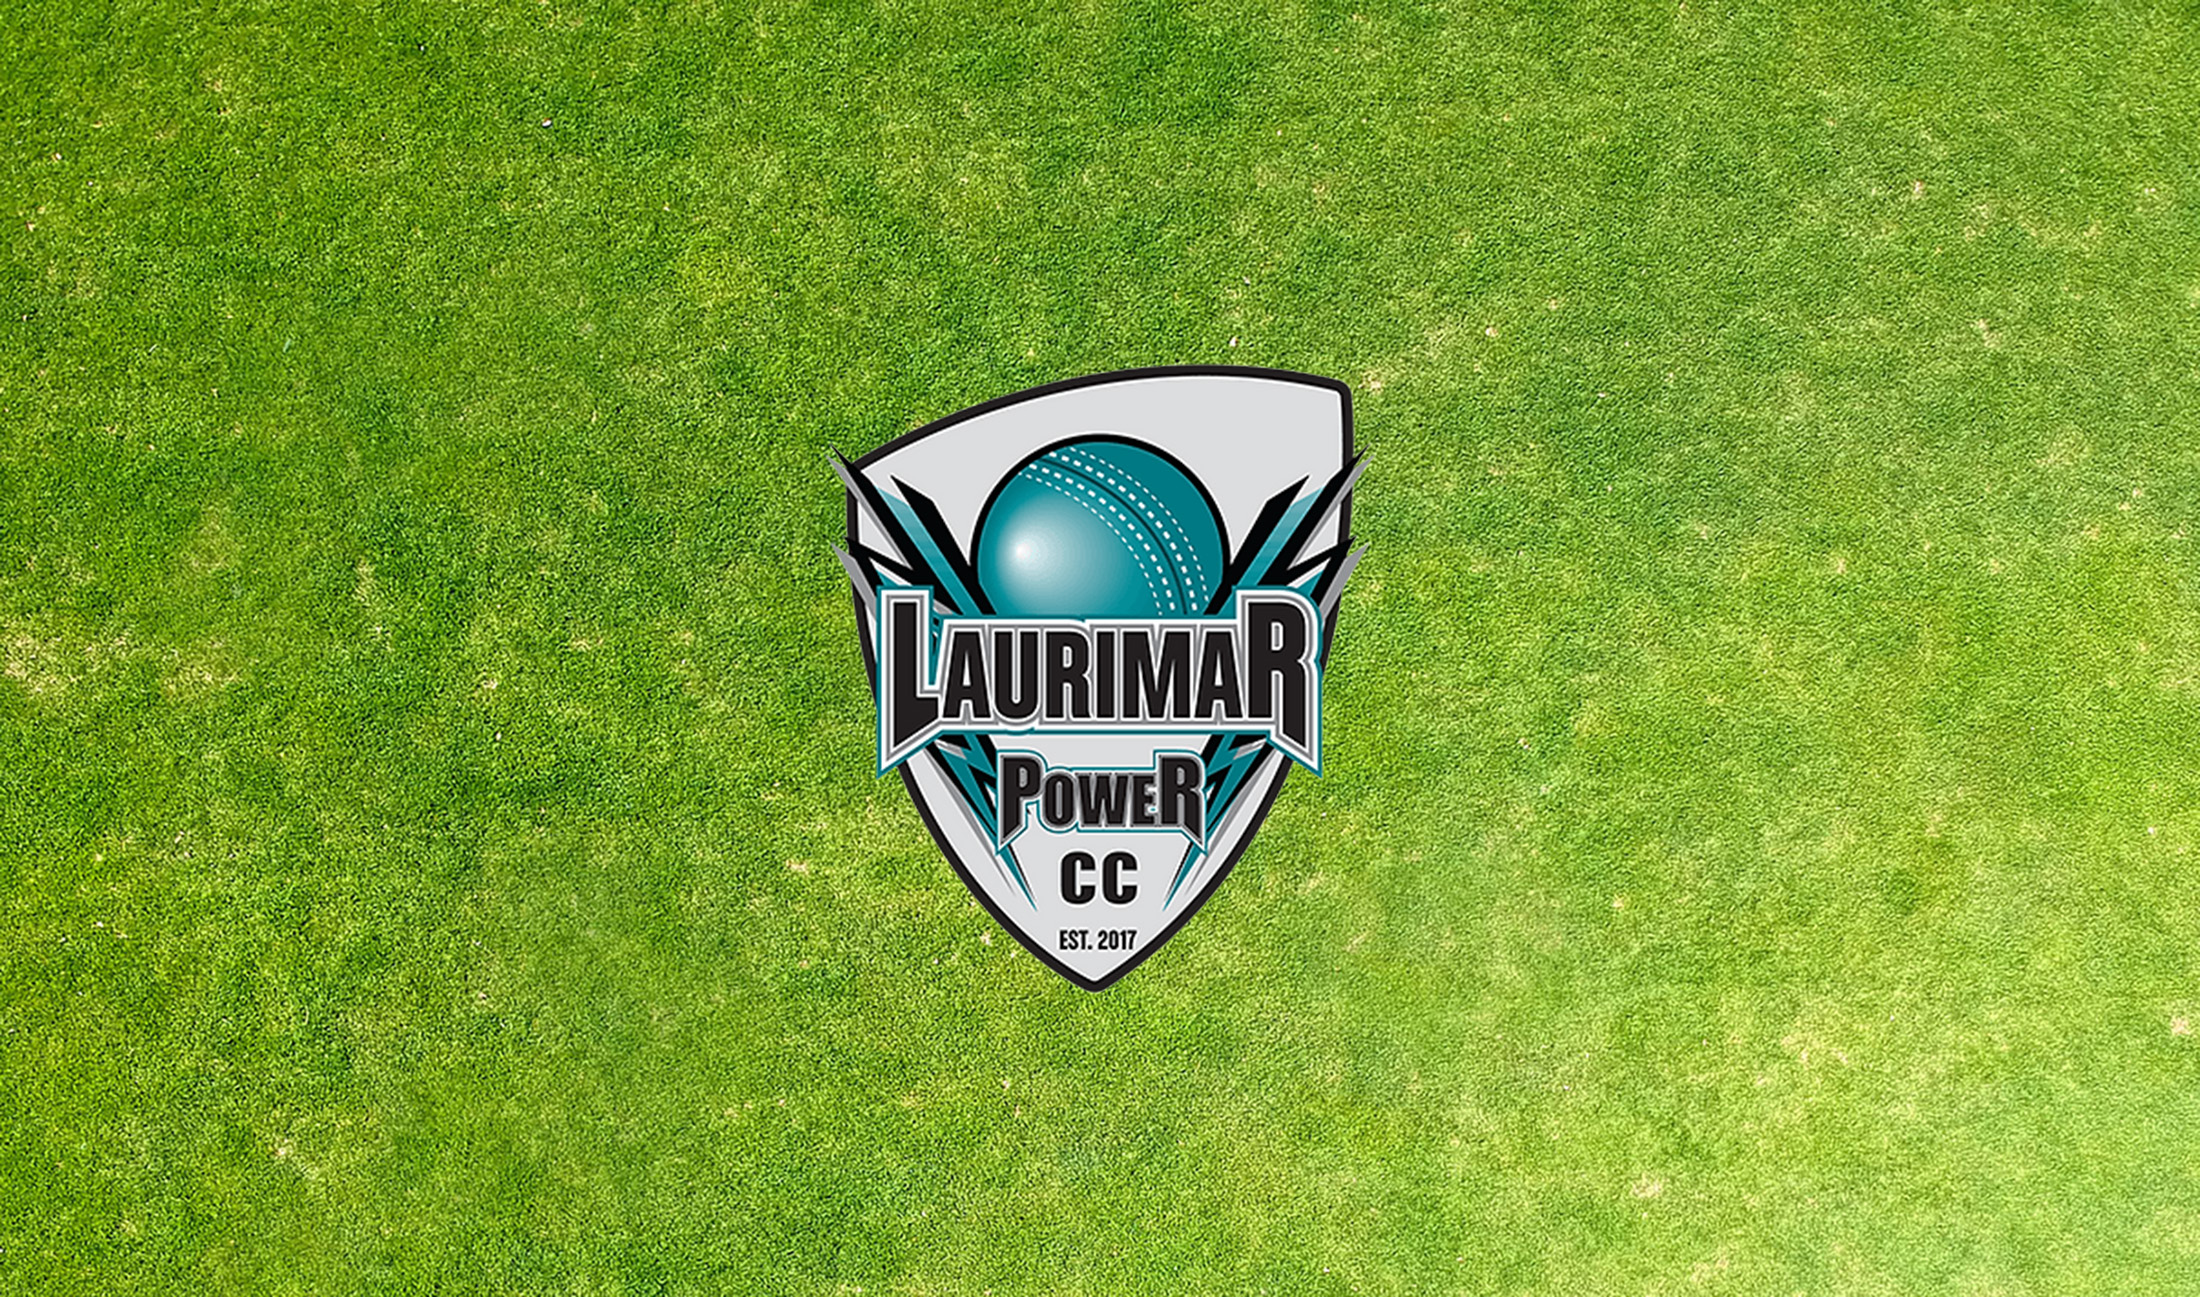 Laurimar Cricket Club seeking Women’s Senior Coach for season 2022/23